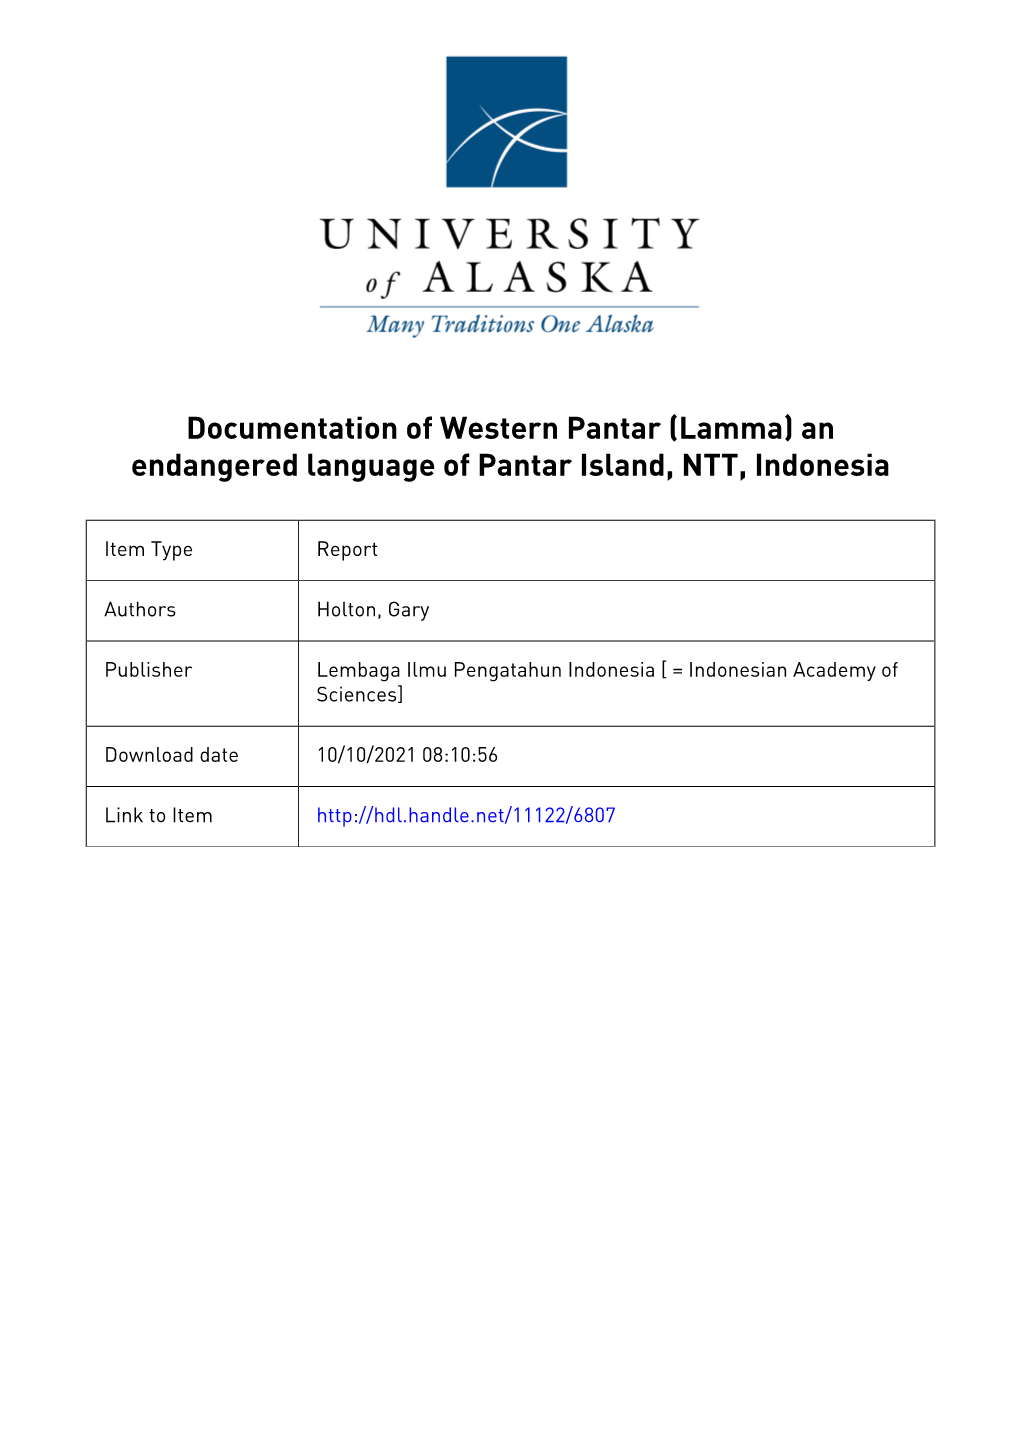 Documentation of Western Pantar (Lamma) an Endangered Language of Pantar Island, NTT, Indonesia